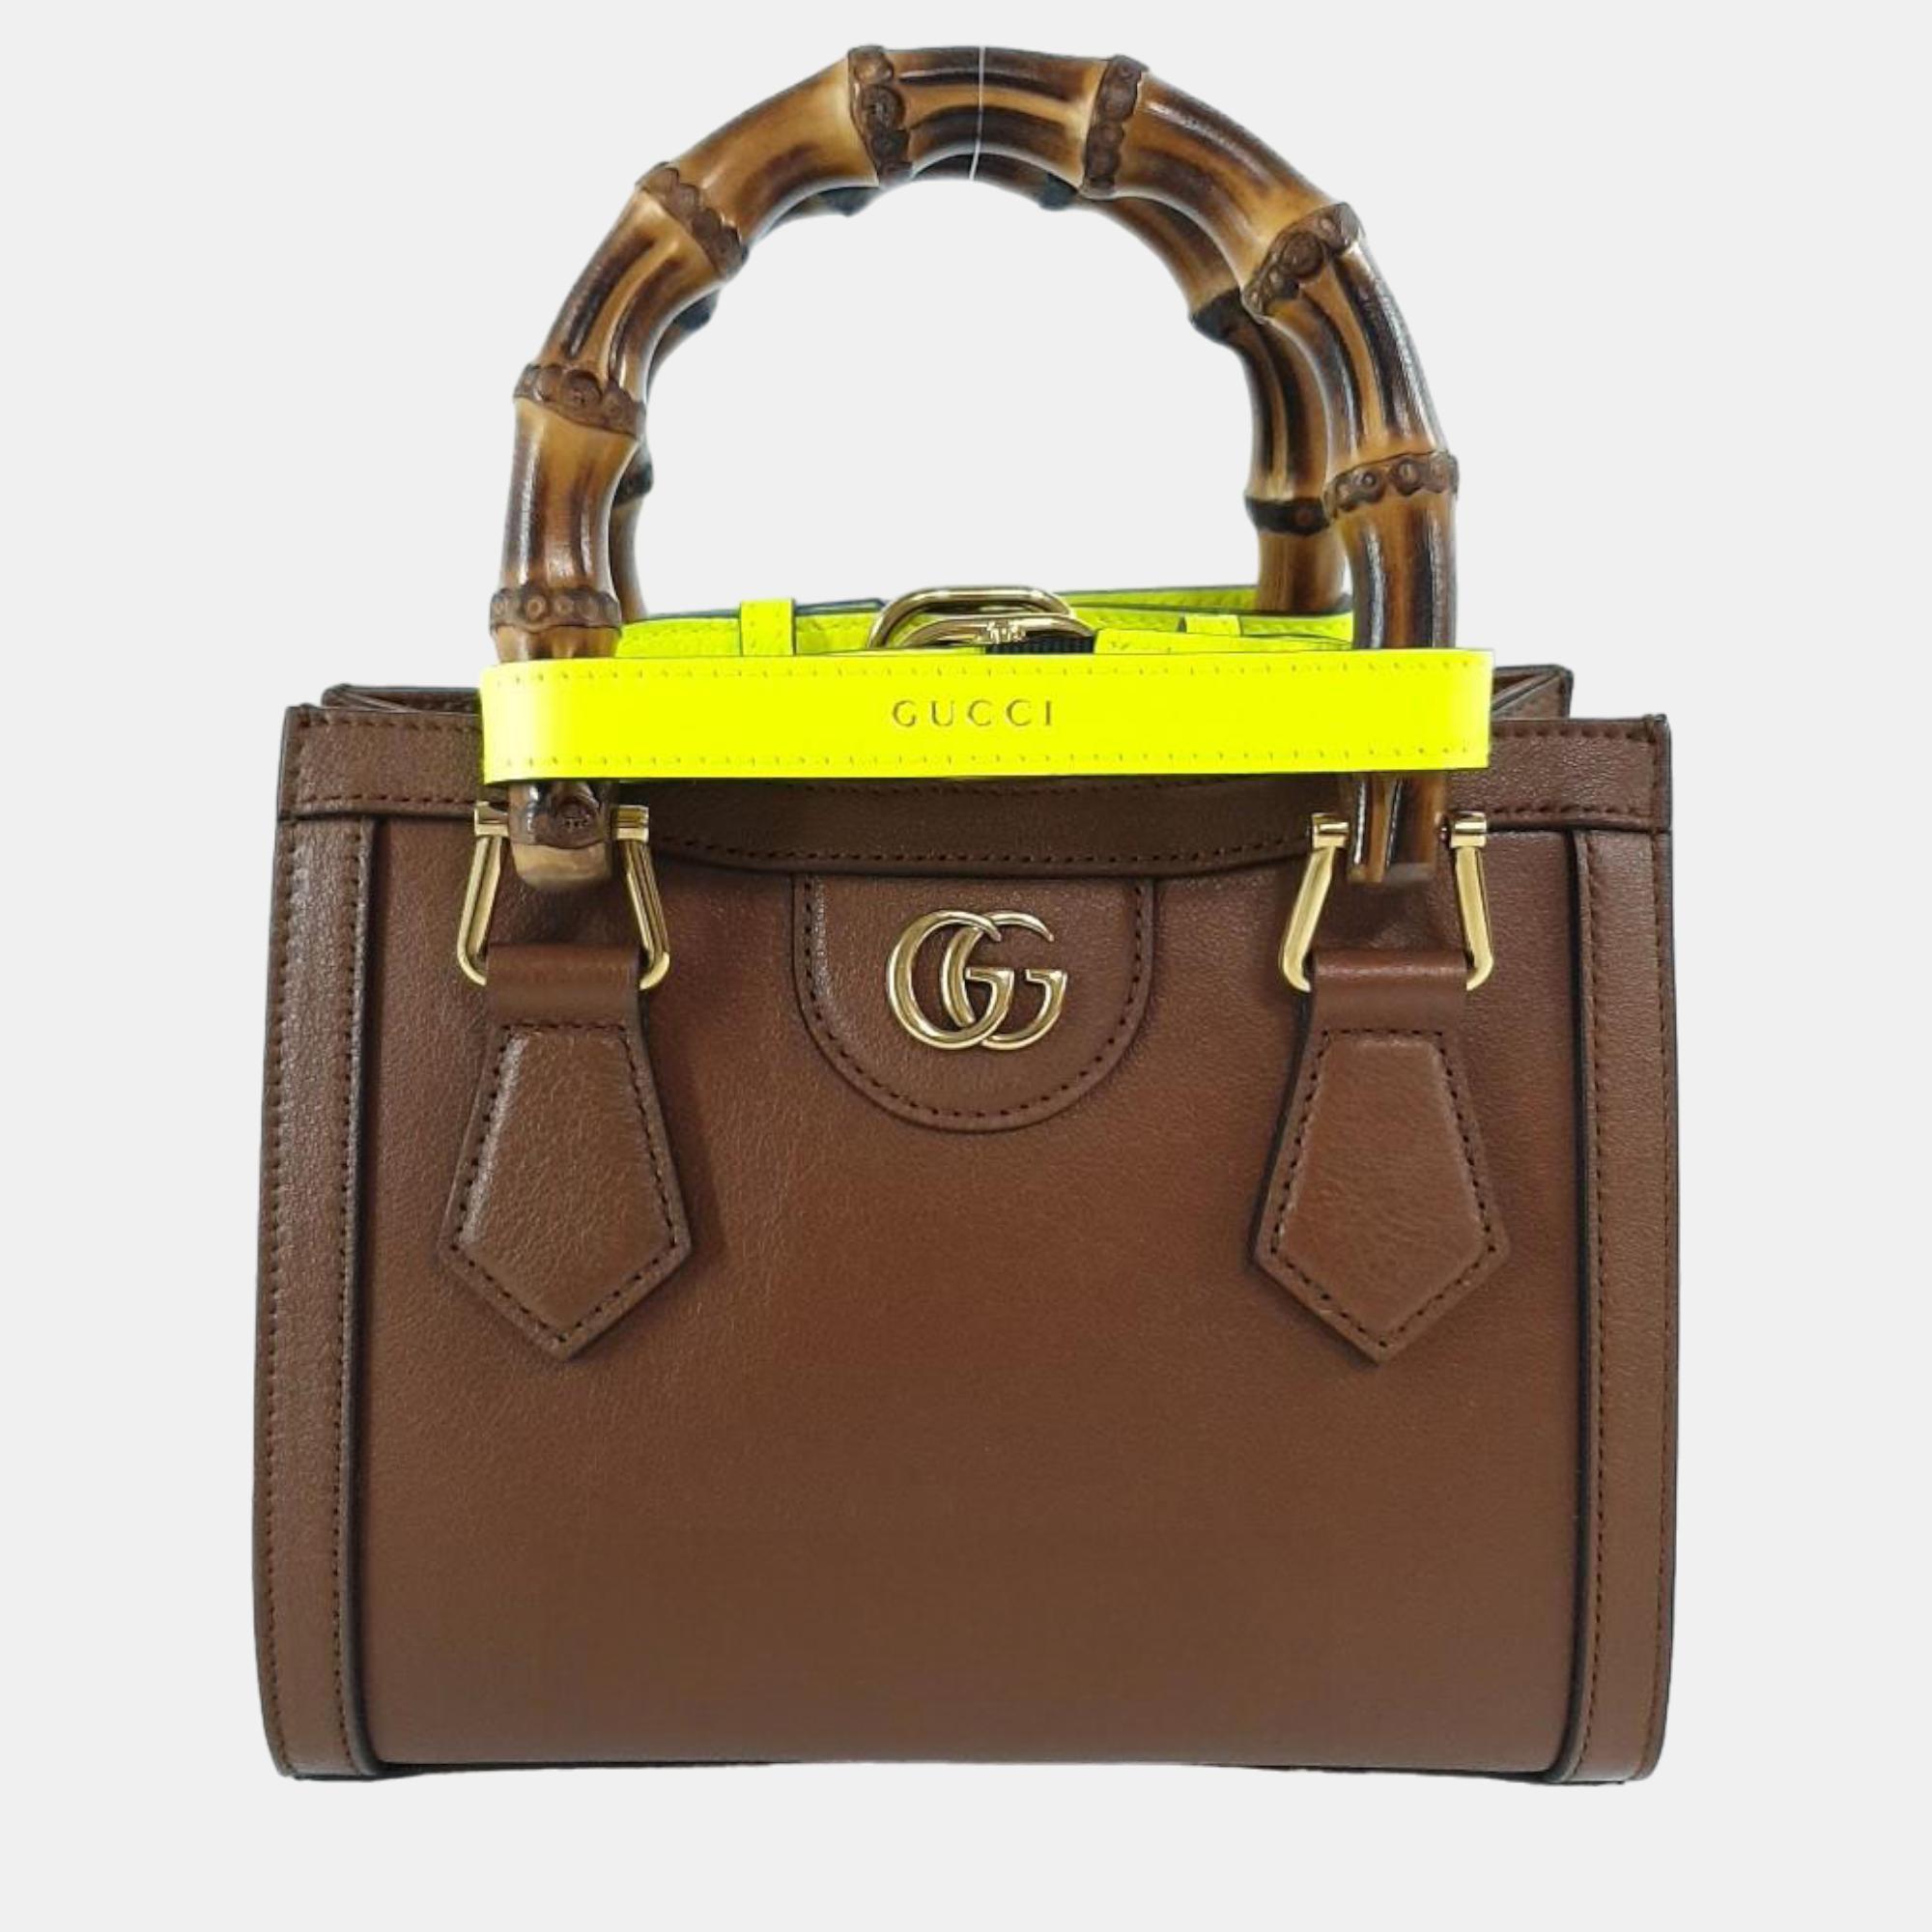 Gucci brown leather mini diana tote bag